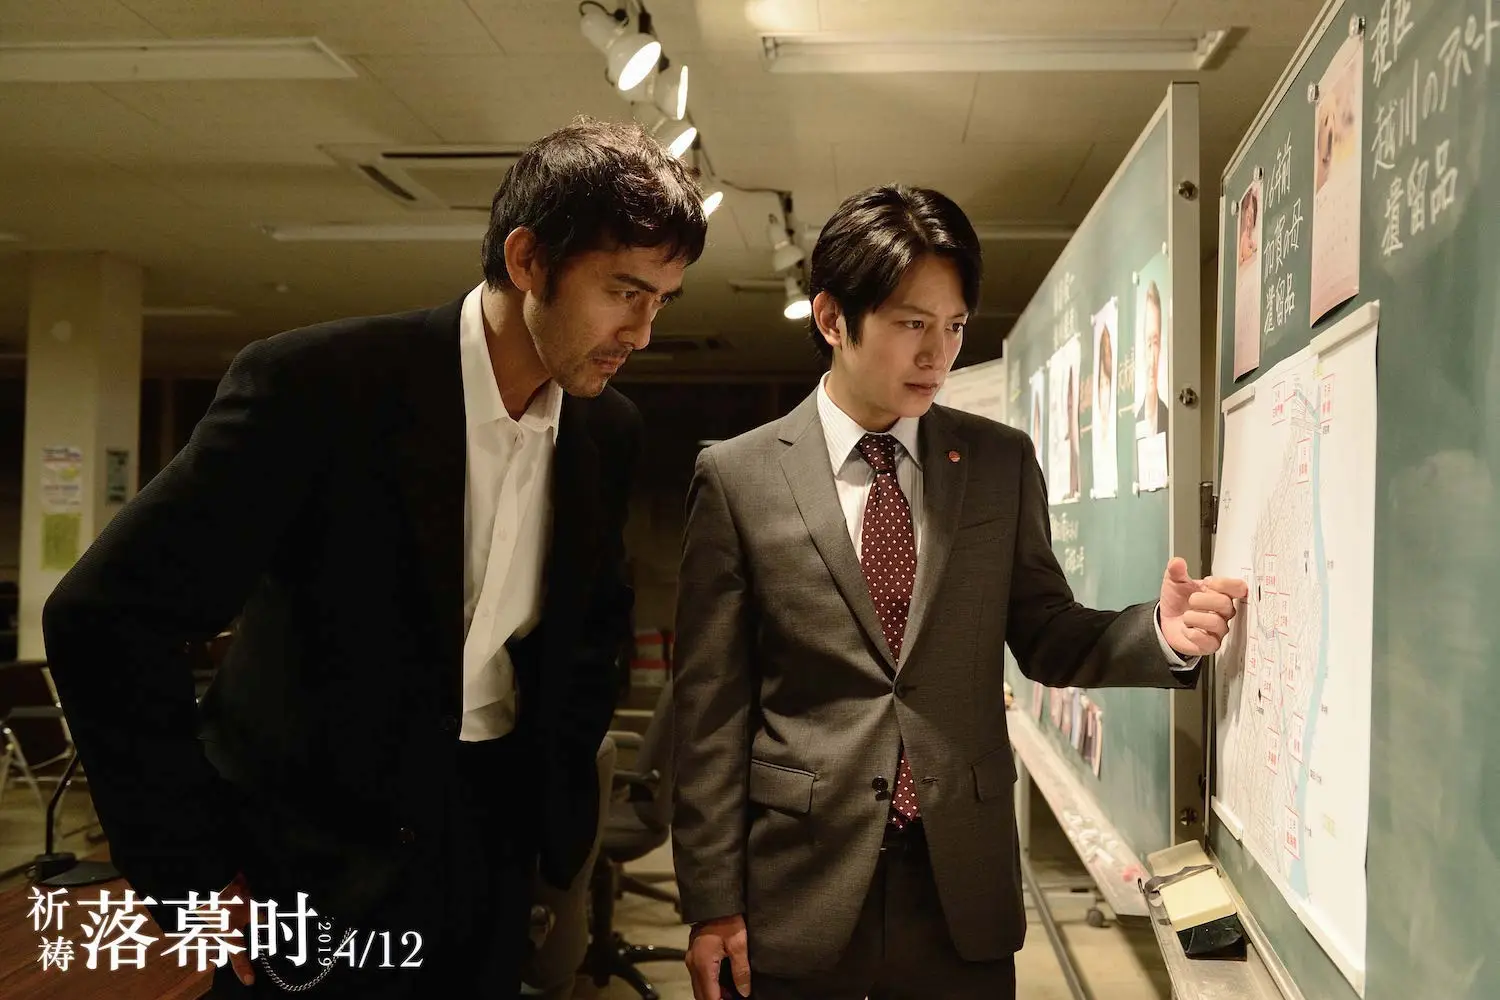  Hiroshi Abe (actor) 和沟端淳平推导凶手作案地点.jpg